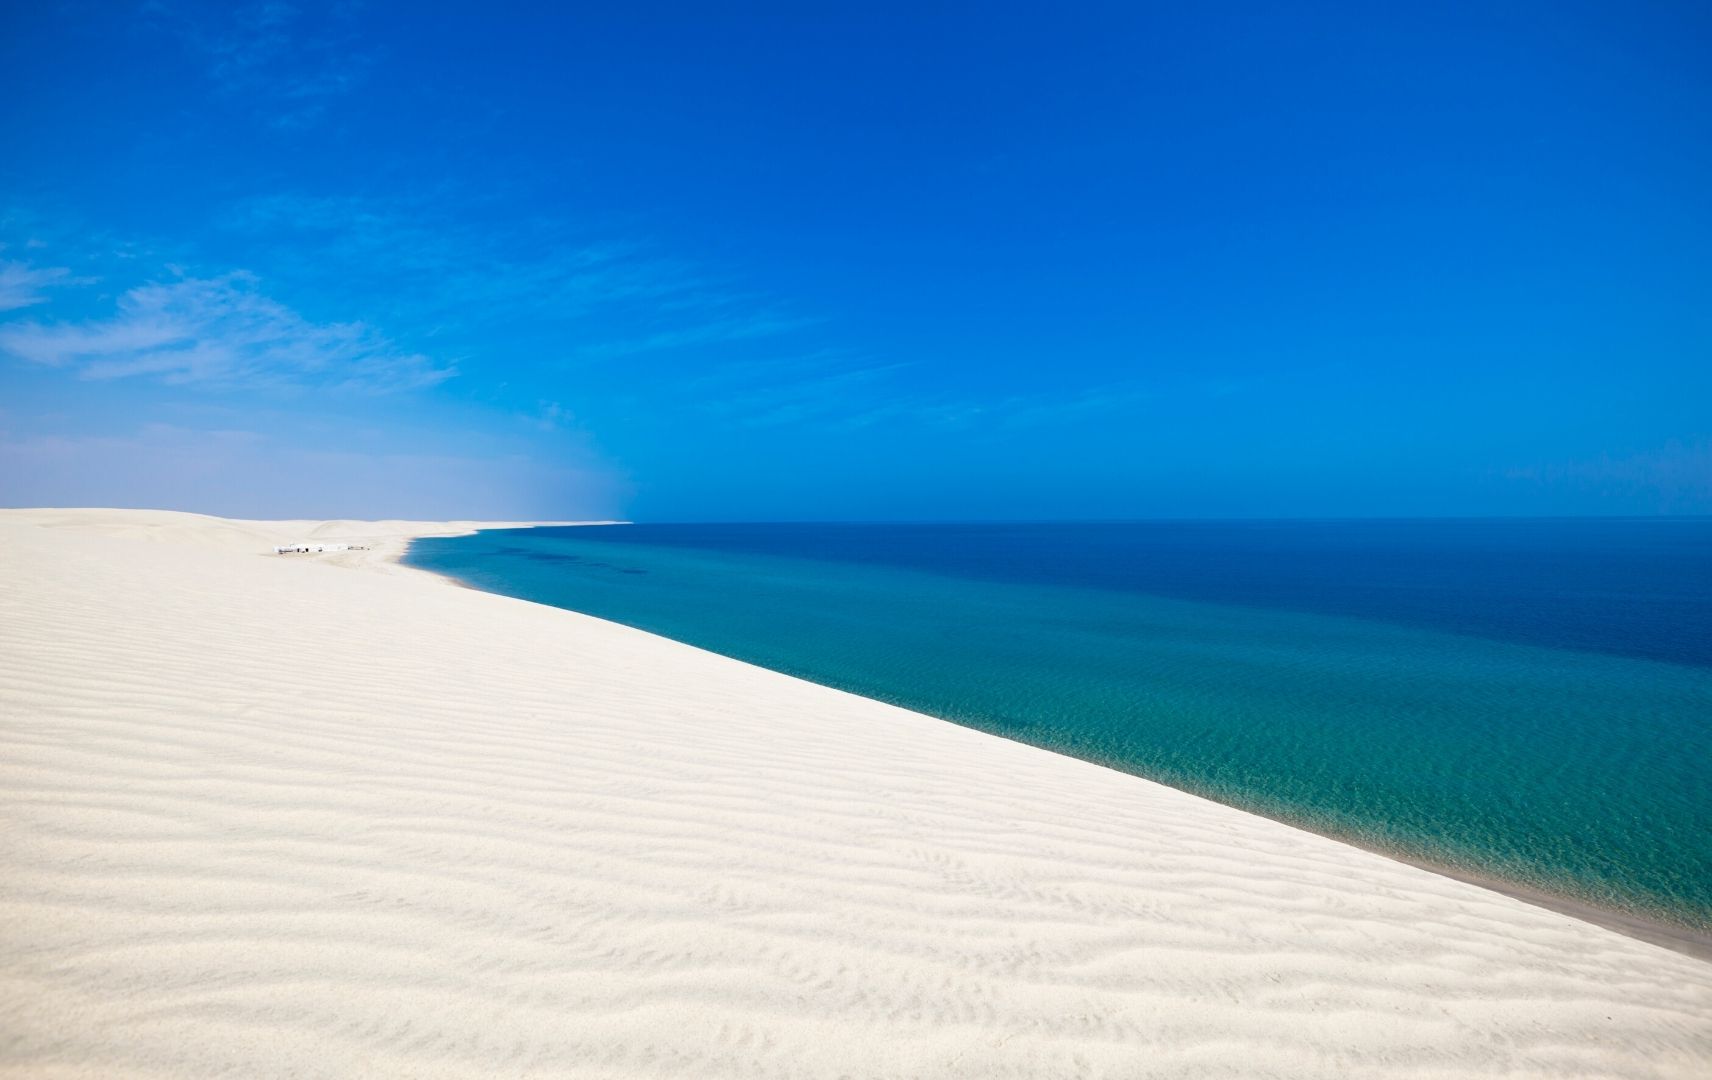 Düne und Meer in Katar